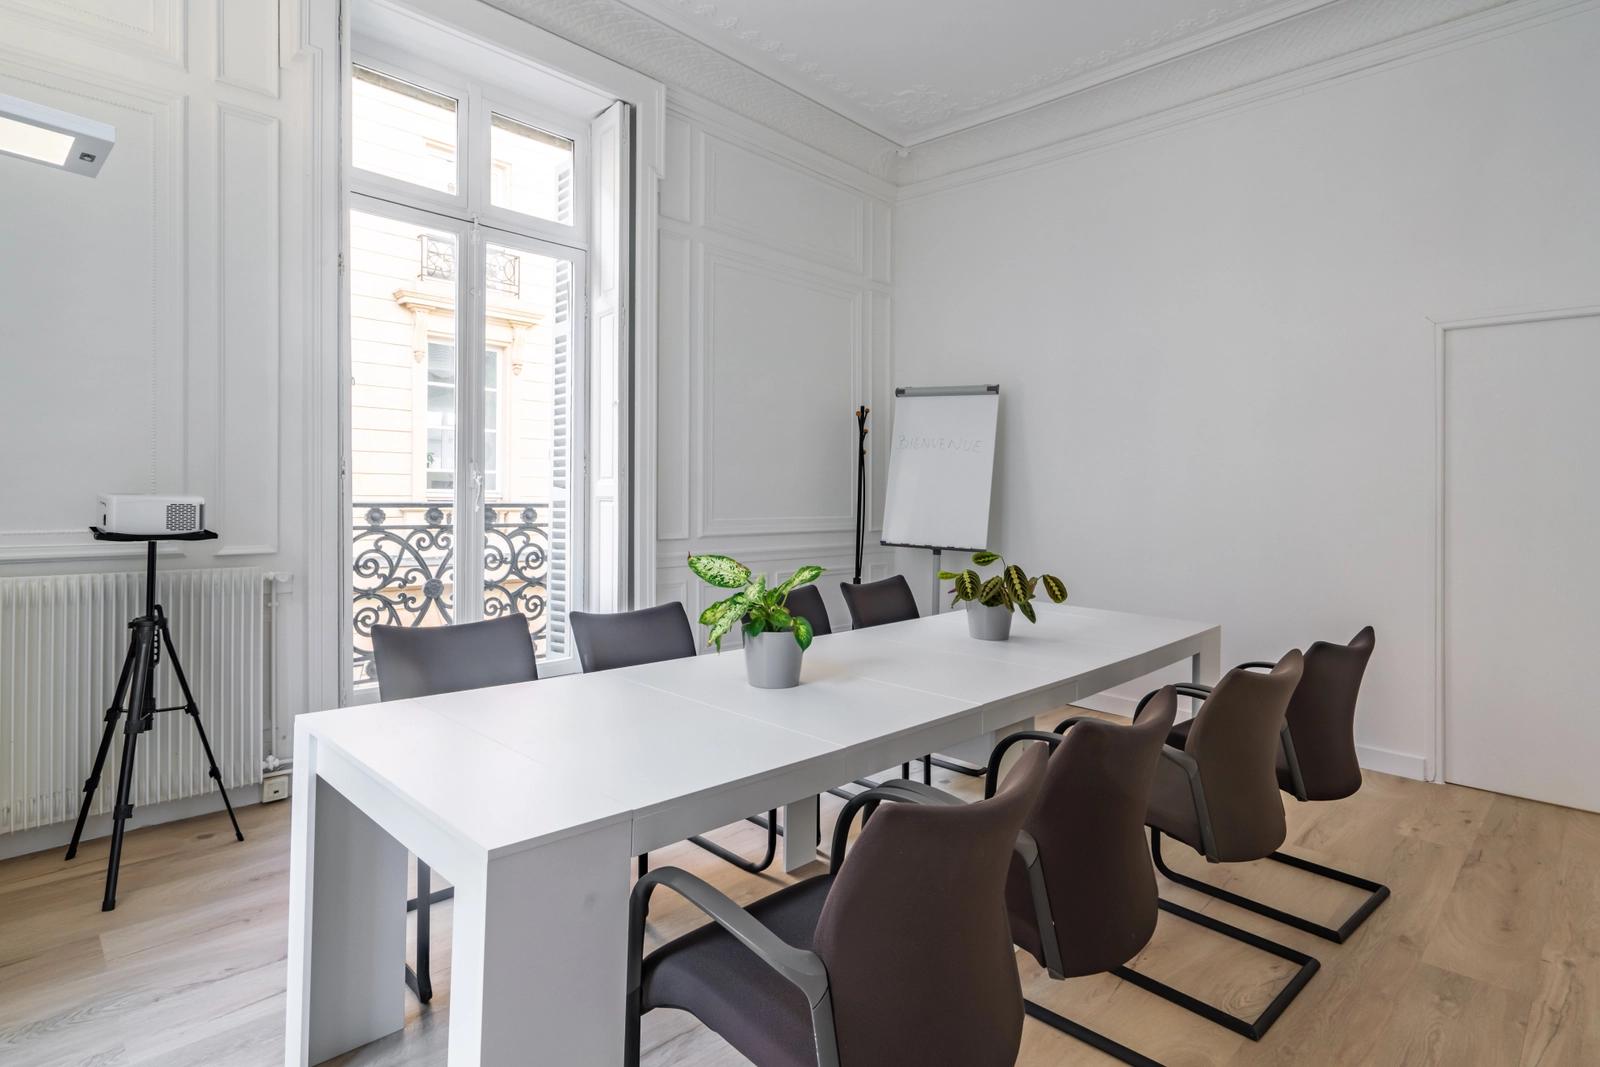 Meeting room in Haussmann-style meeting space - 0